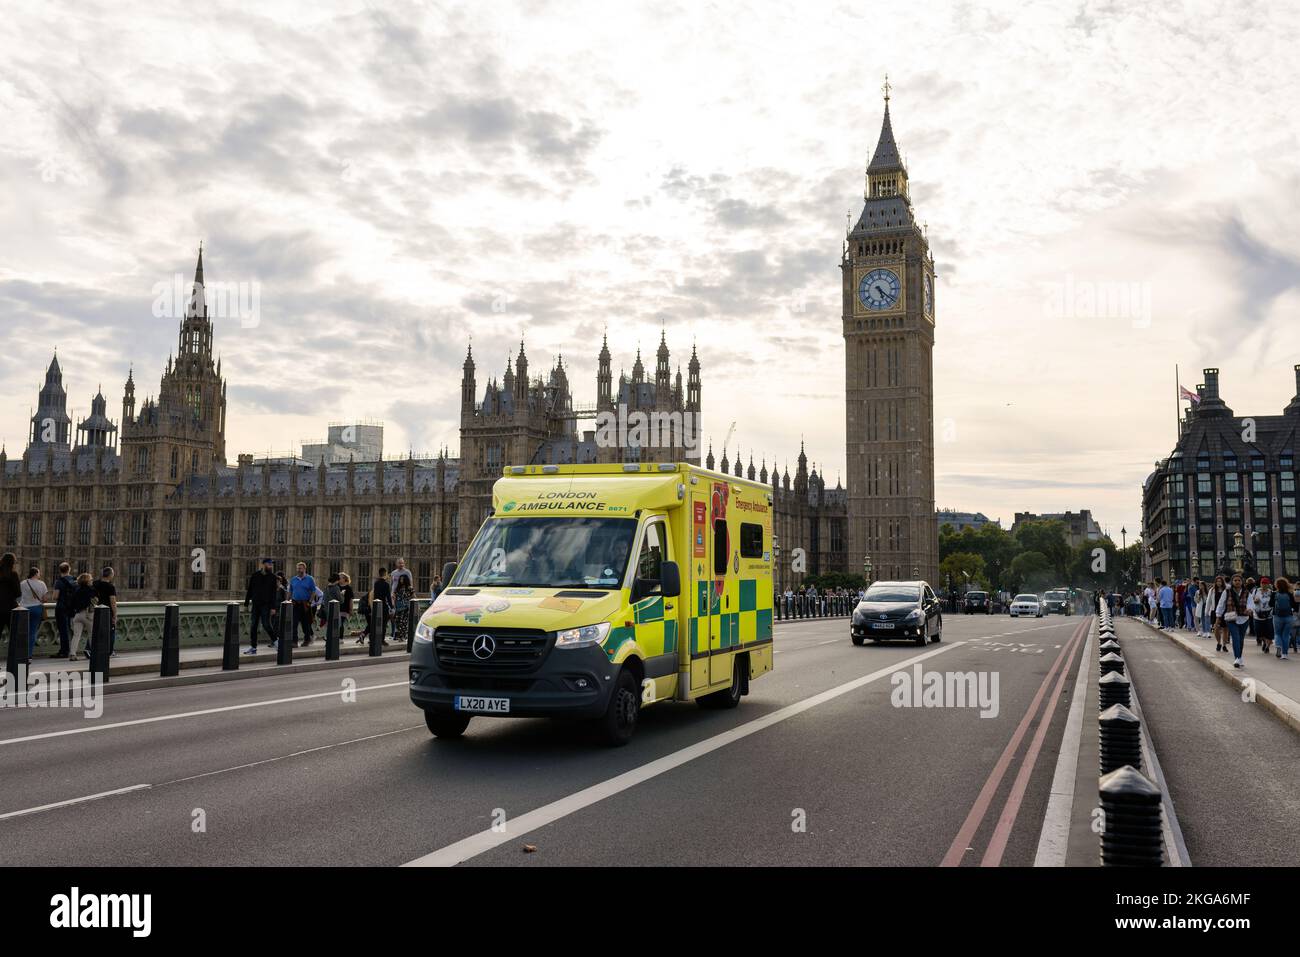 London, UK - September 11 2022 - Emergency Ambulance van speeds along a street in London near Big Ben Stock Photo